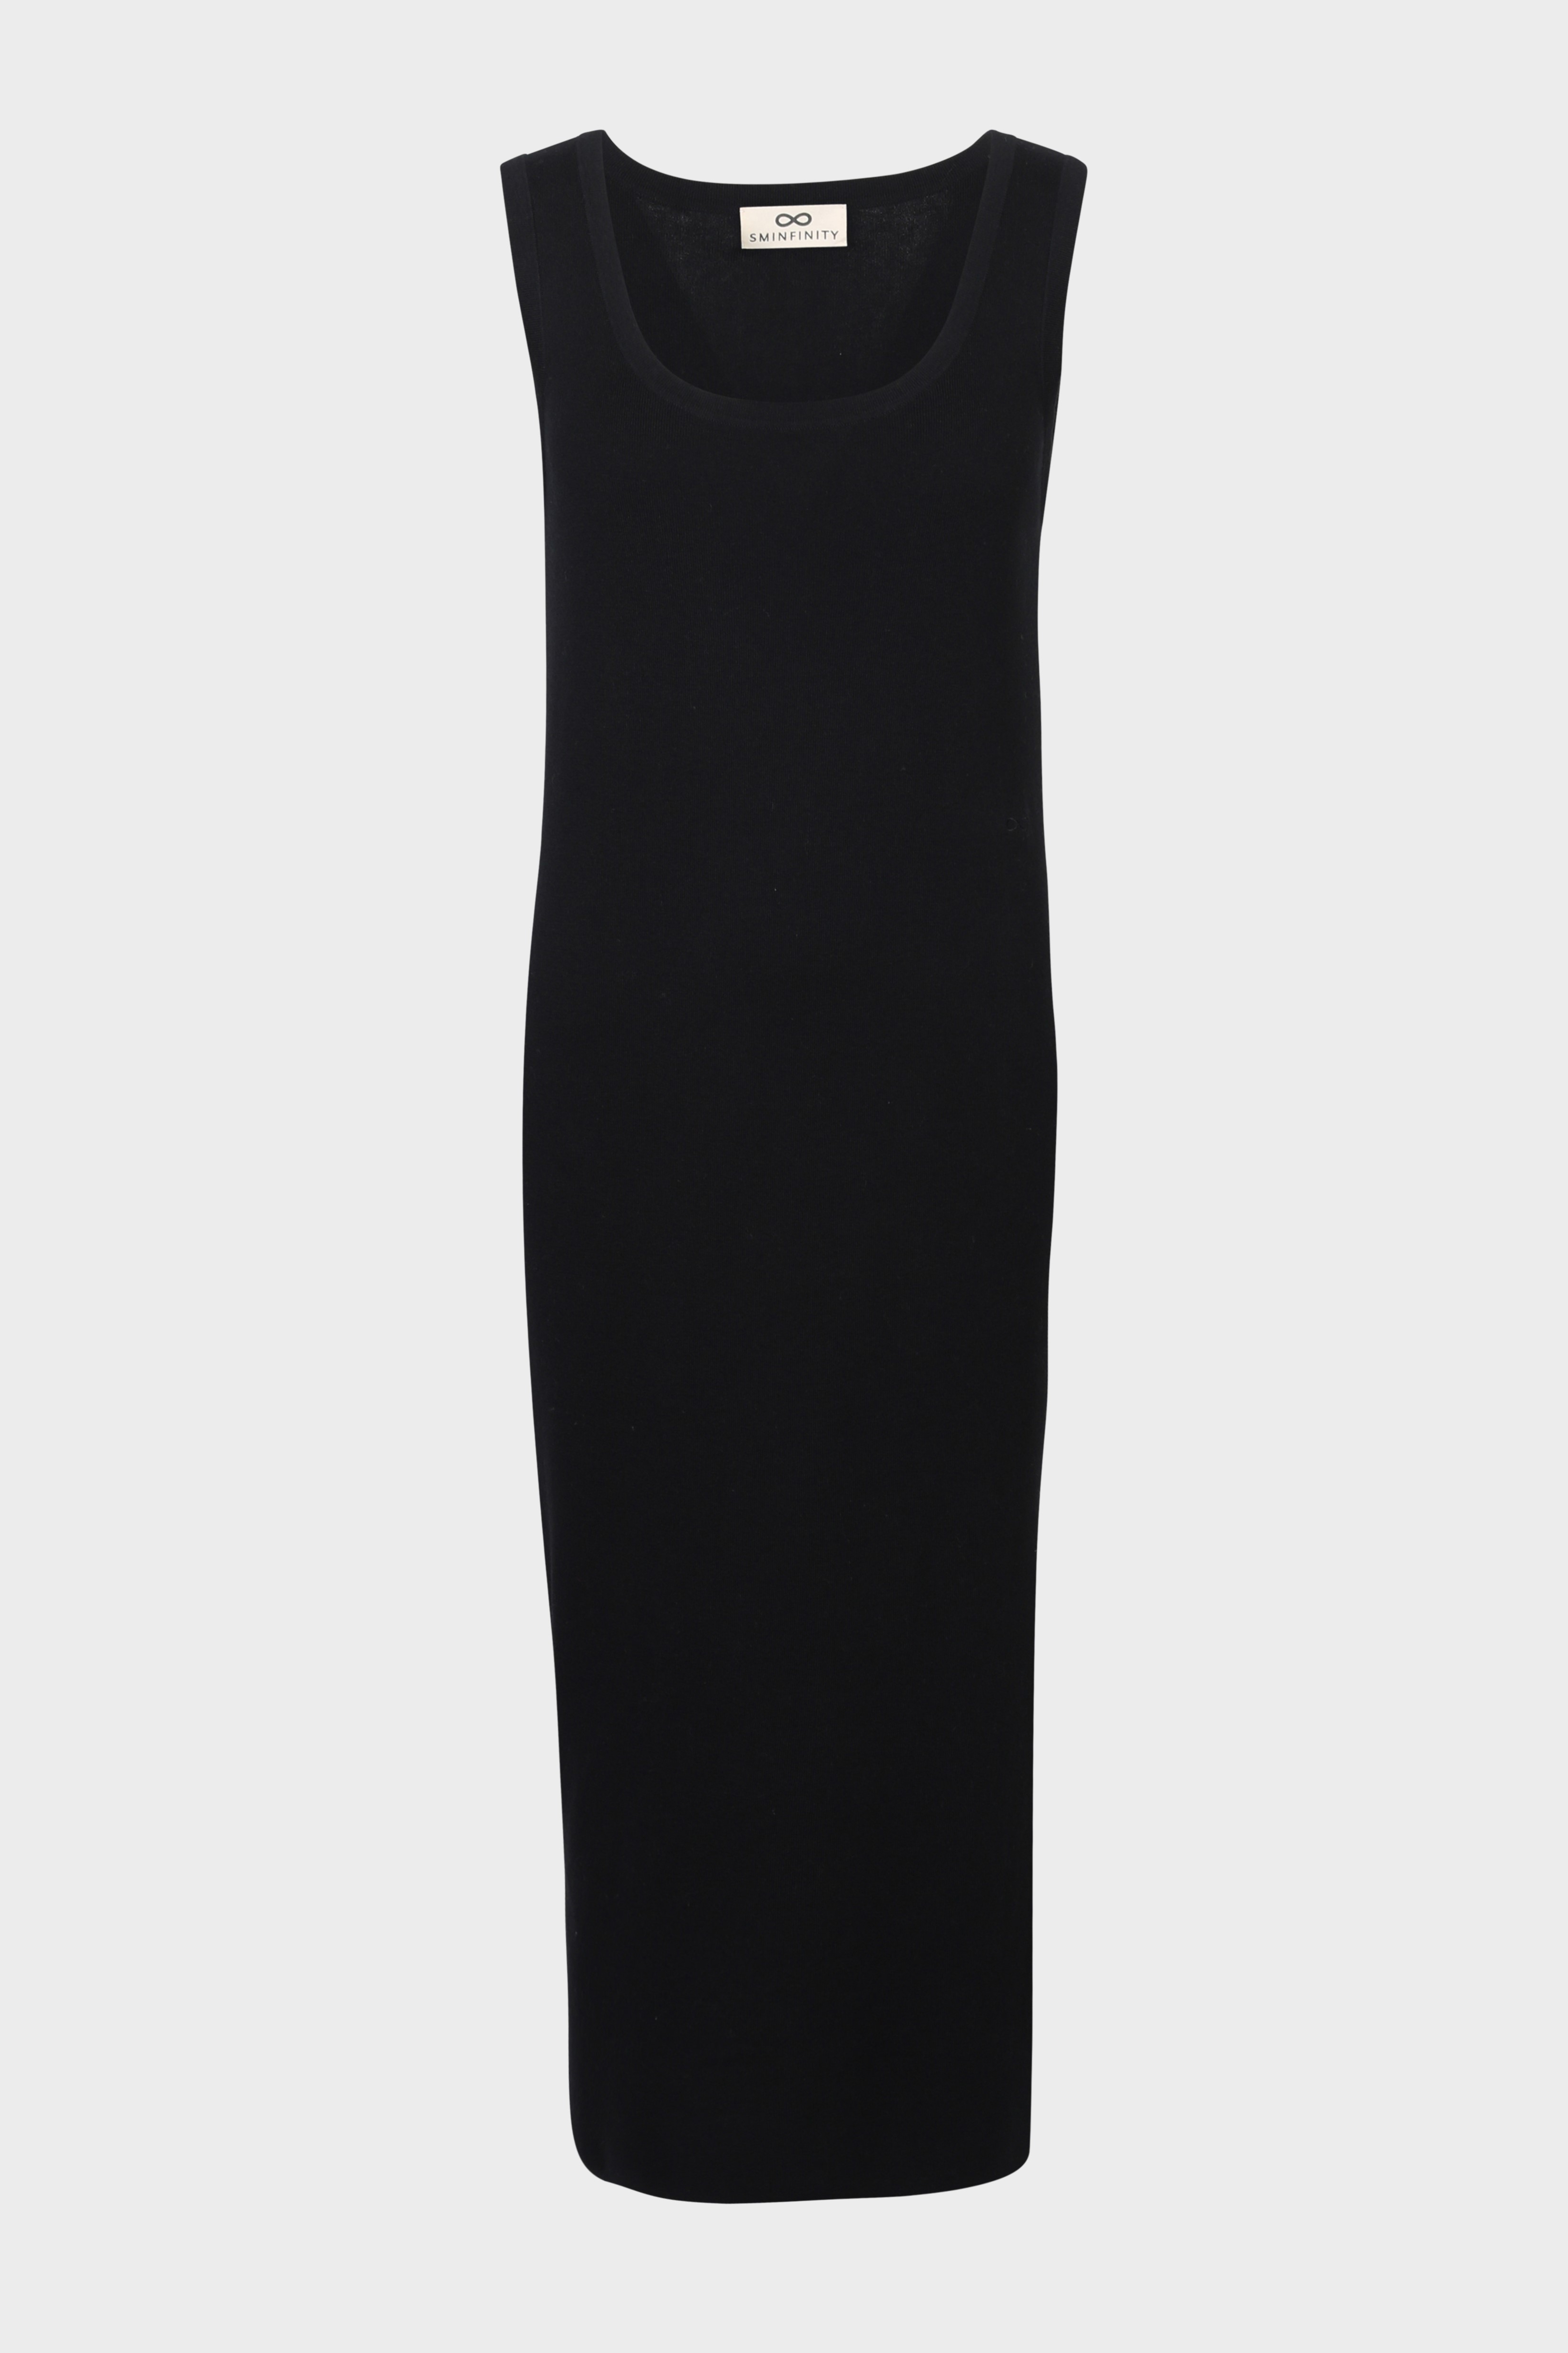 SMINFINITY Comfy Knit Maxi Tank Dress in Black XS/S